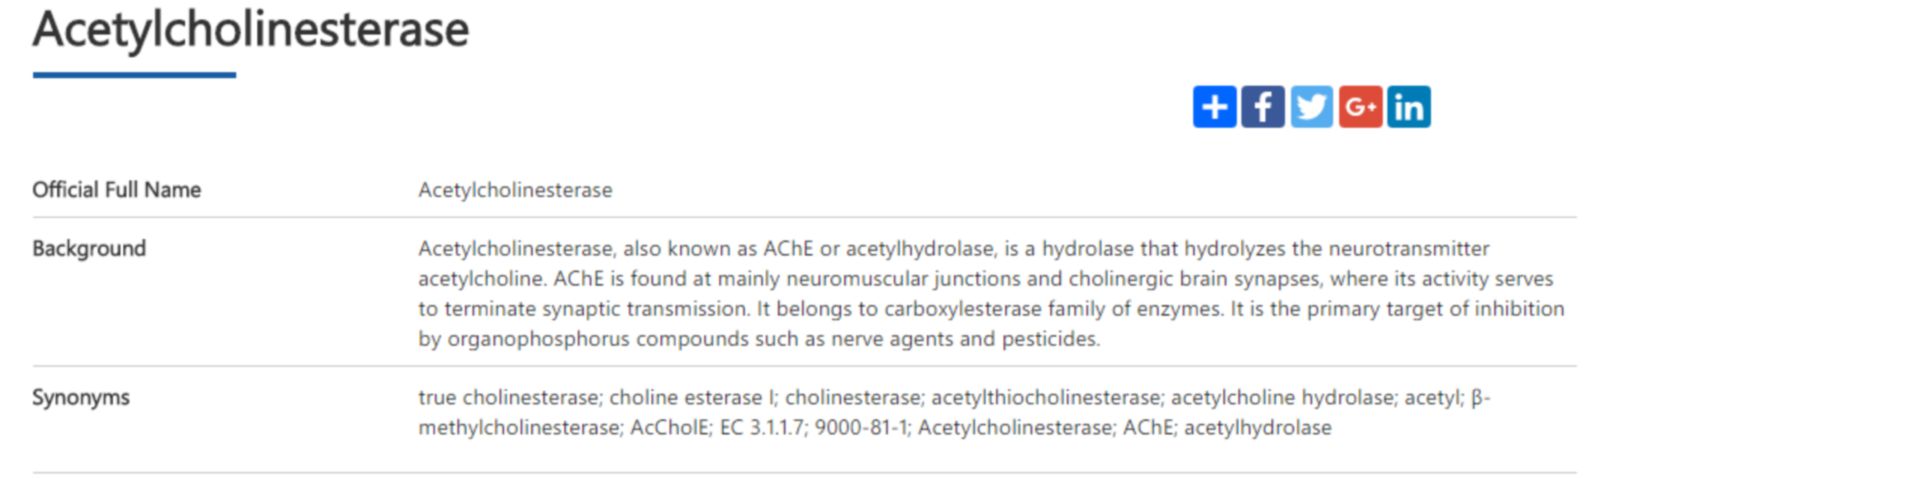 ache enzyme